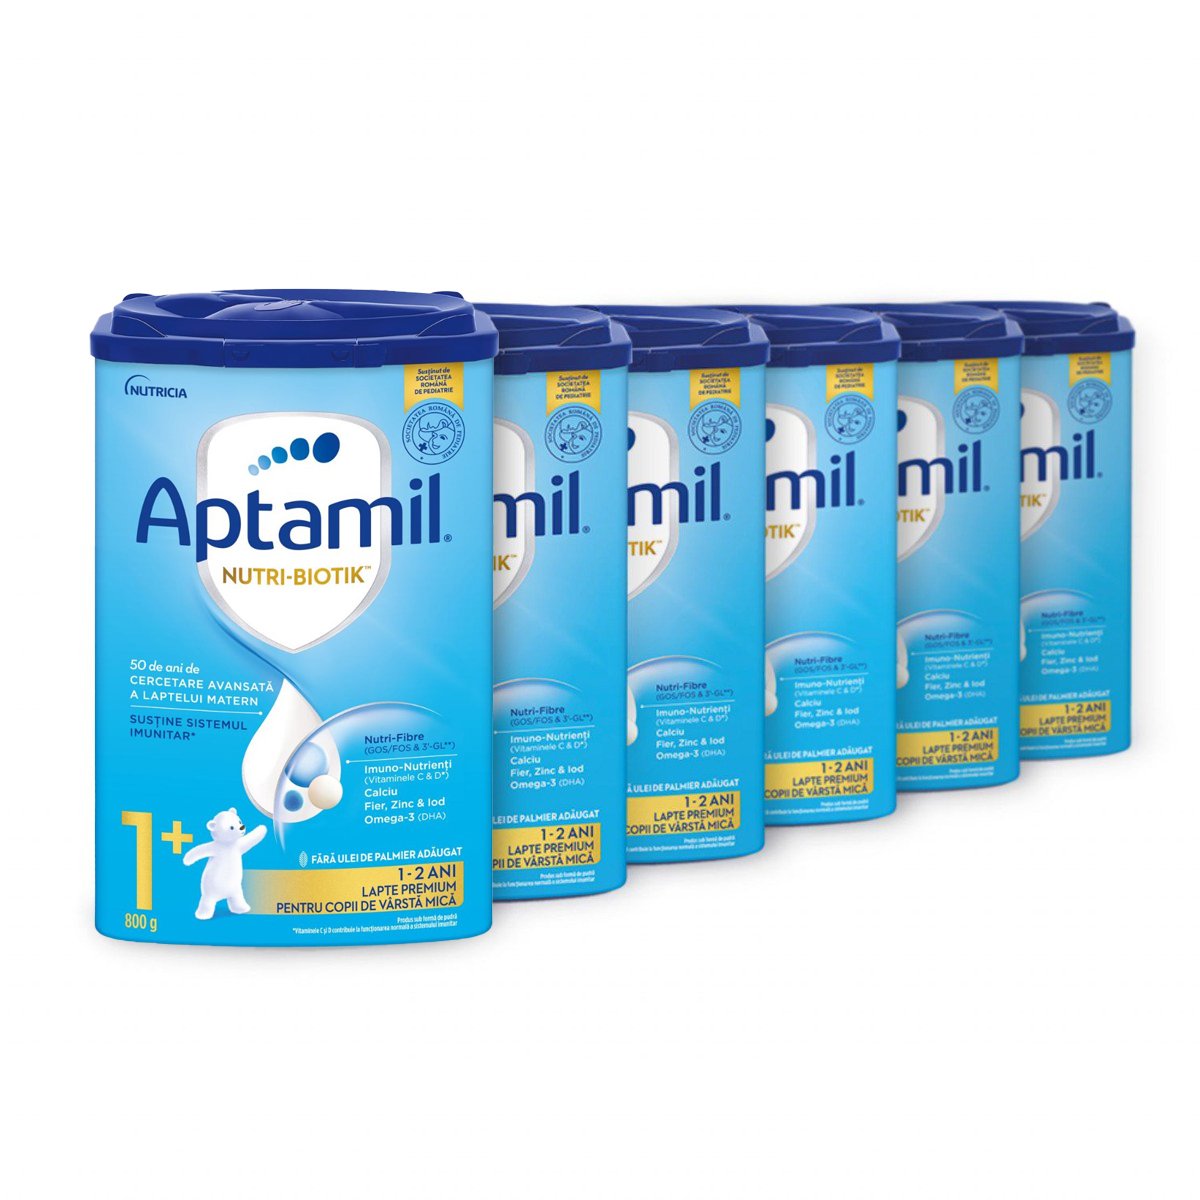 Lapte praf Aptamil Nutri-Biotik 1+, 6 pachete x 800 g, 12-24 luni 1+